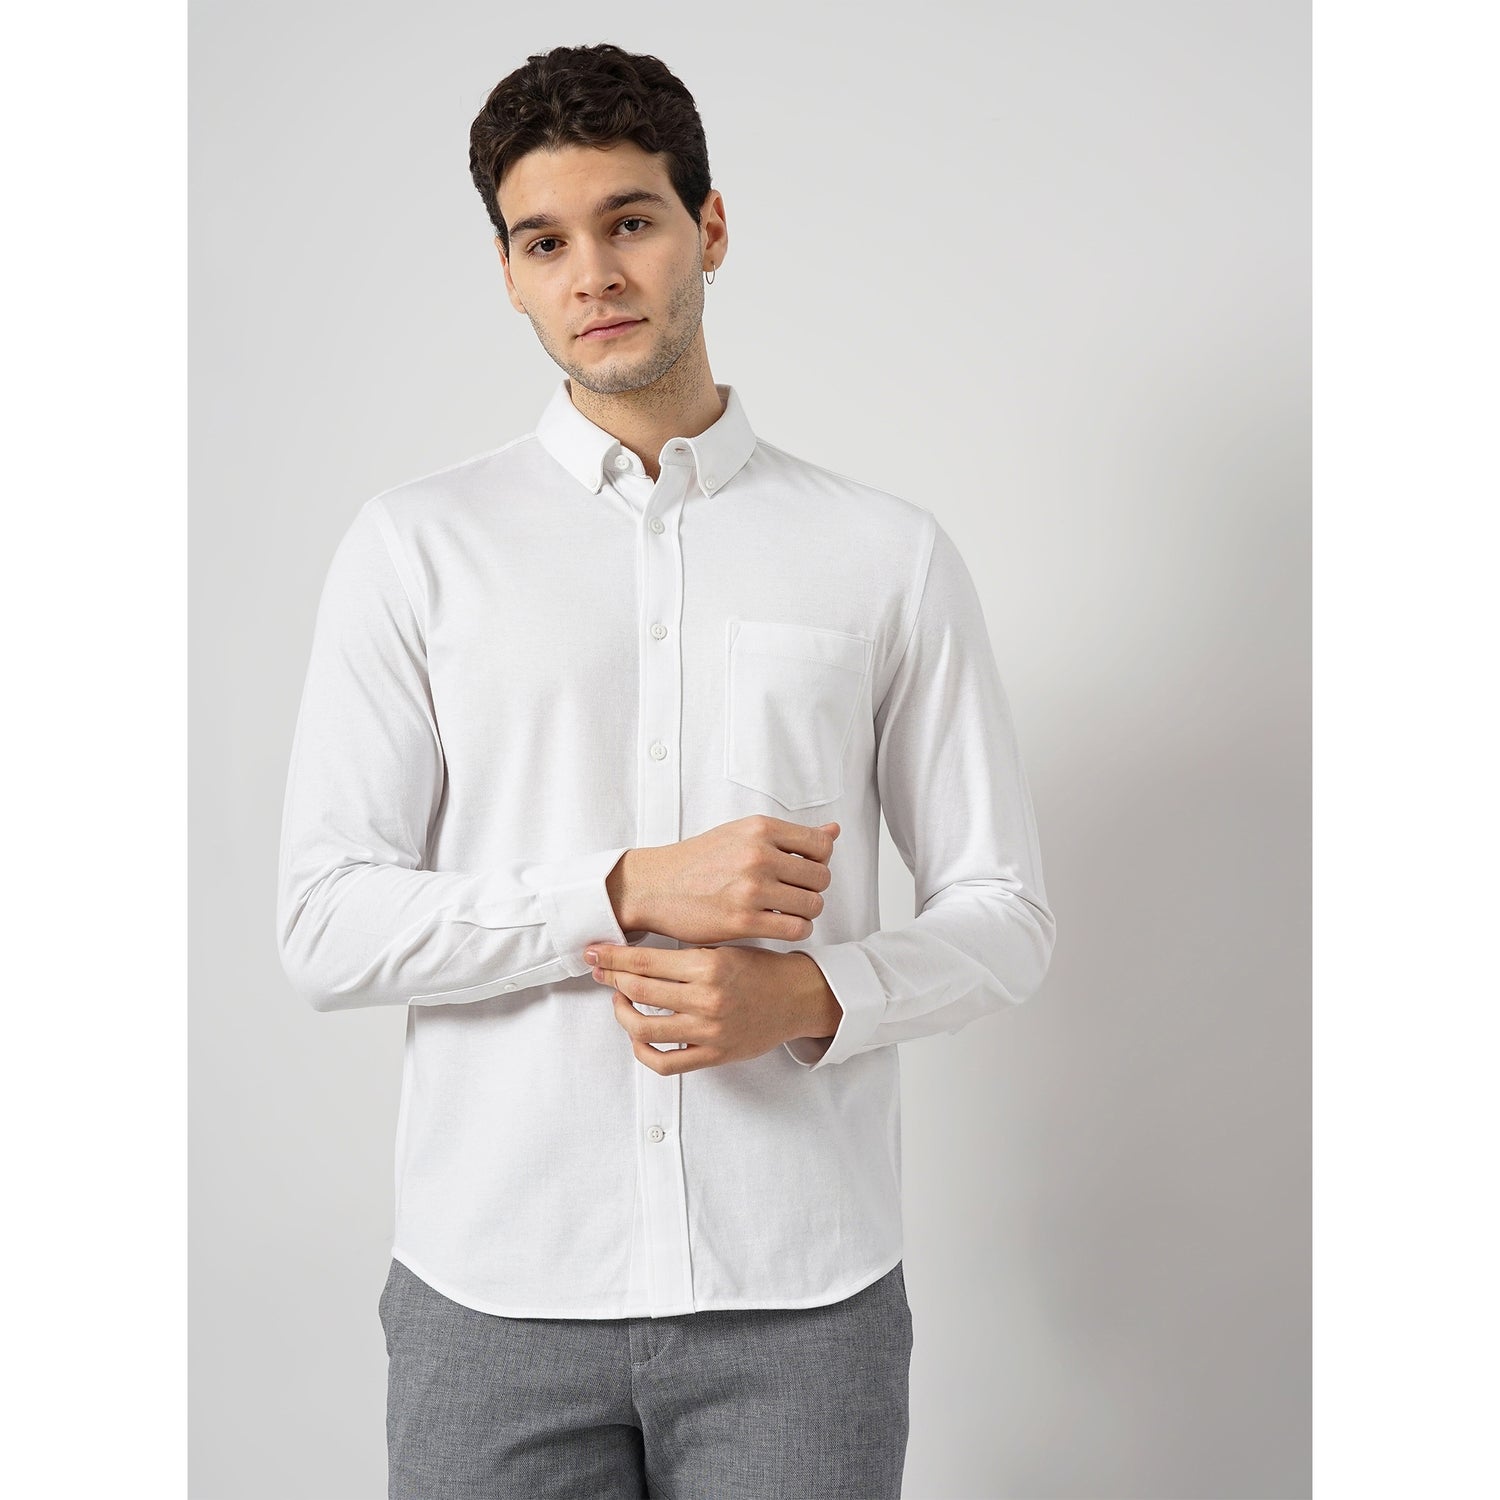 Men White Solid Regular Fit Cotton Knitted Shirt Casual Shirt (BARIK)